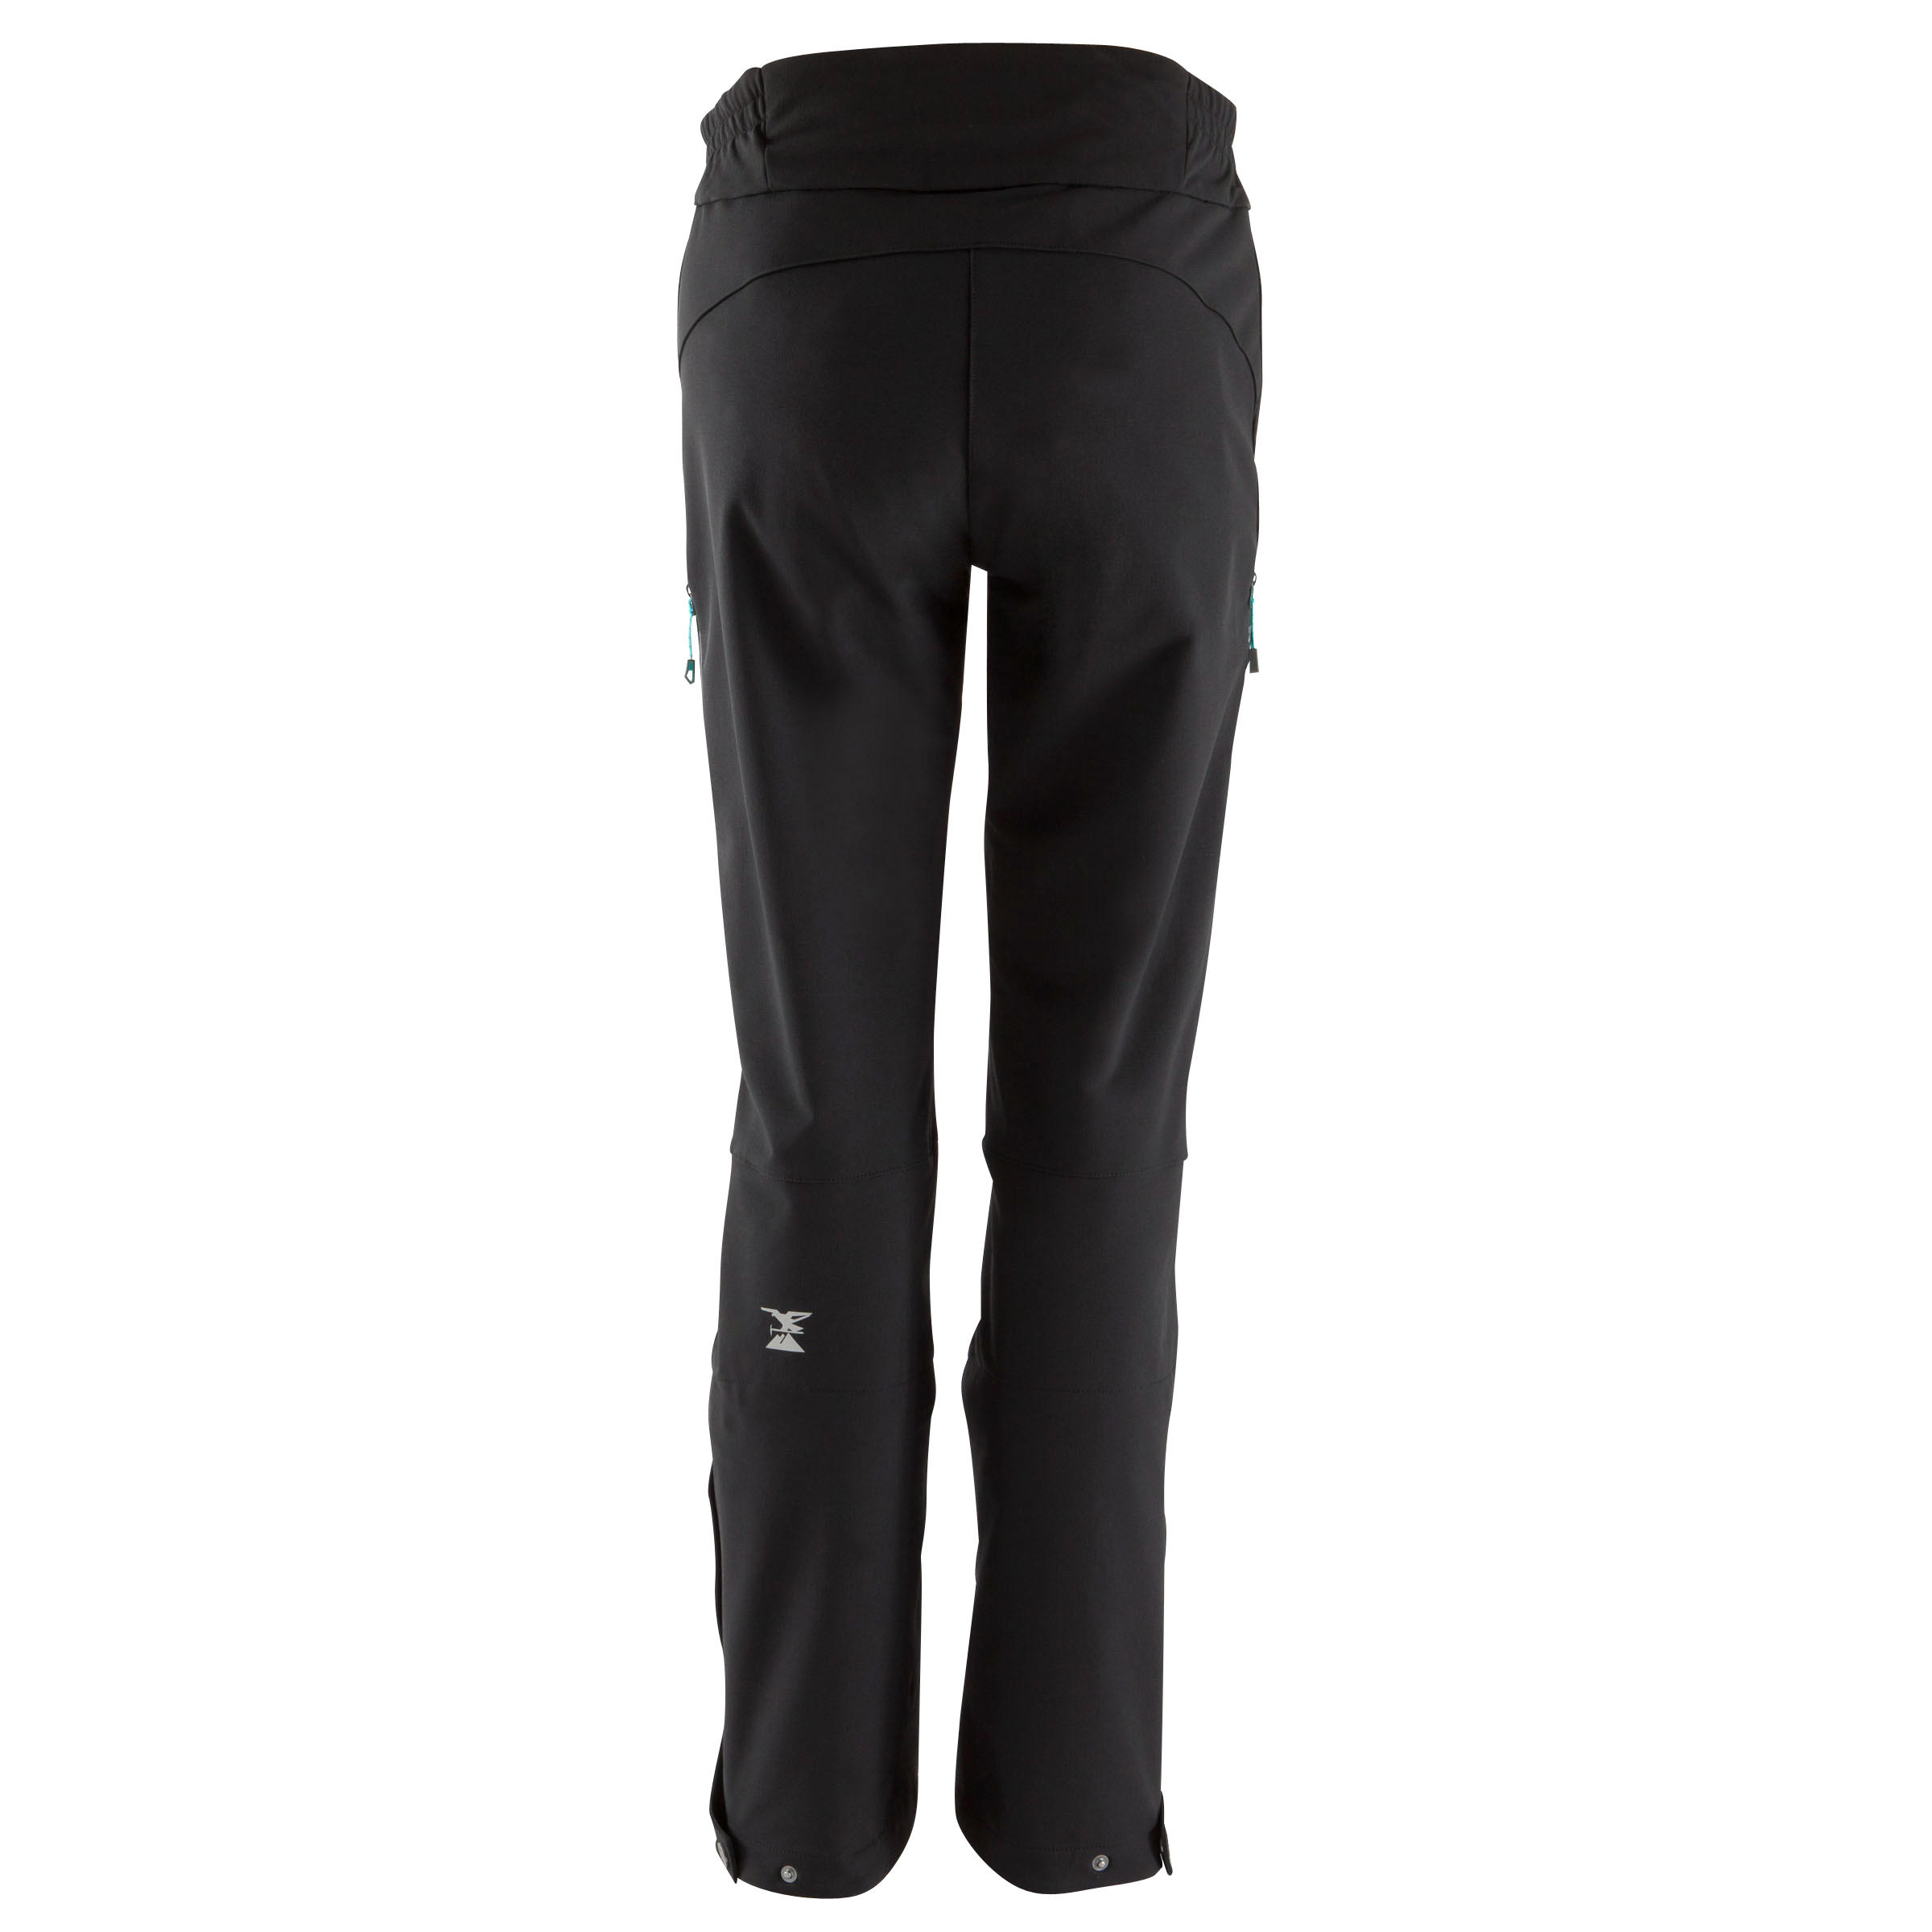 Decathlon ski pants overalls loose warm waterproof overalls BIB500 OVW3